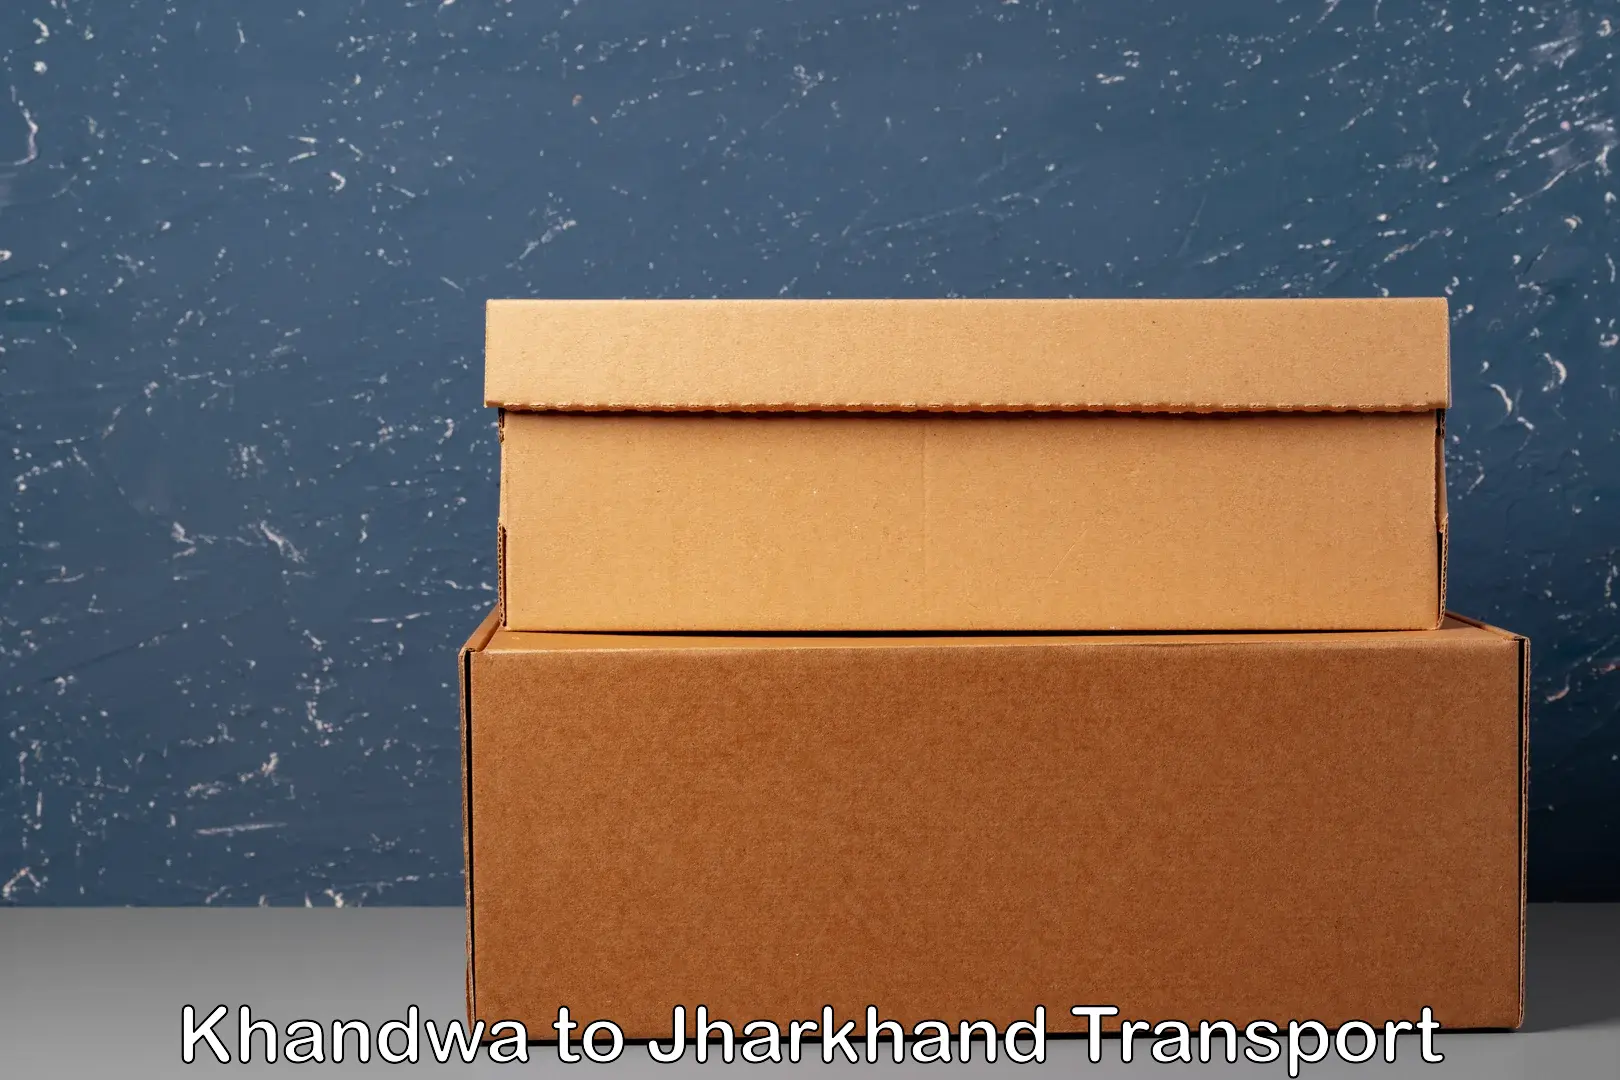 Shipping partner Khandwa to Jharkhand